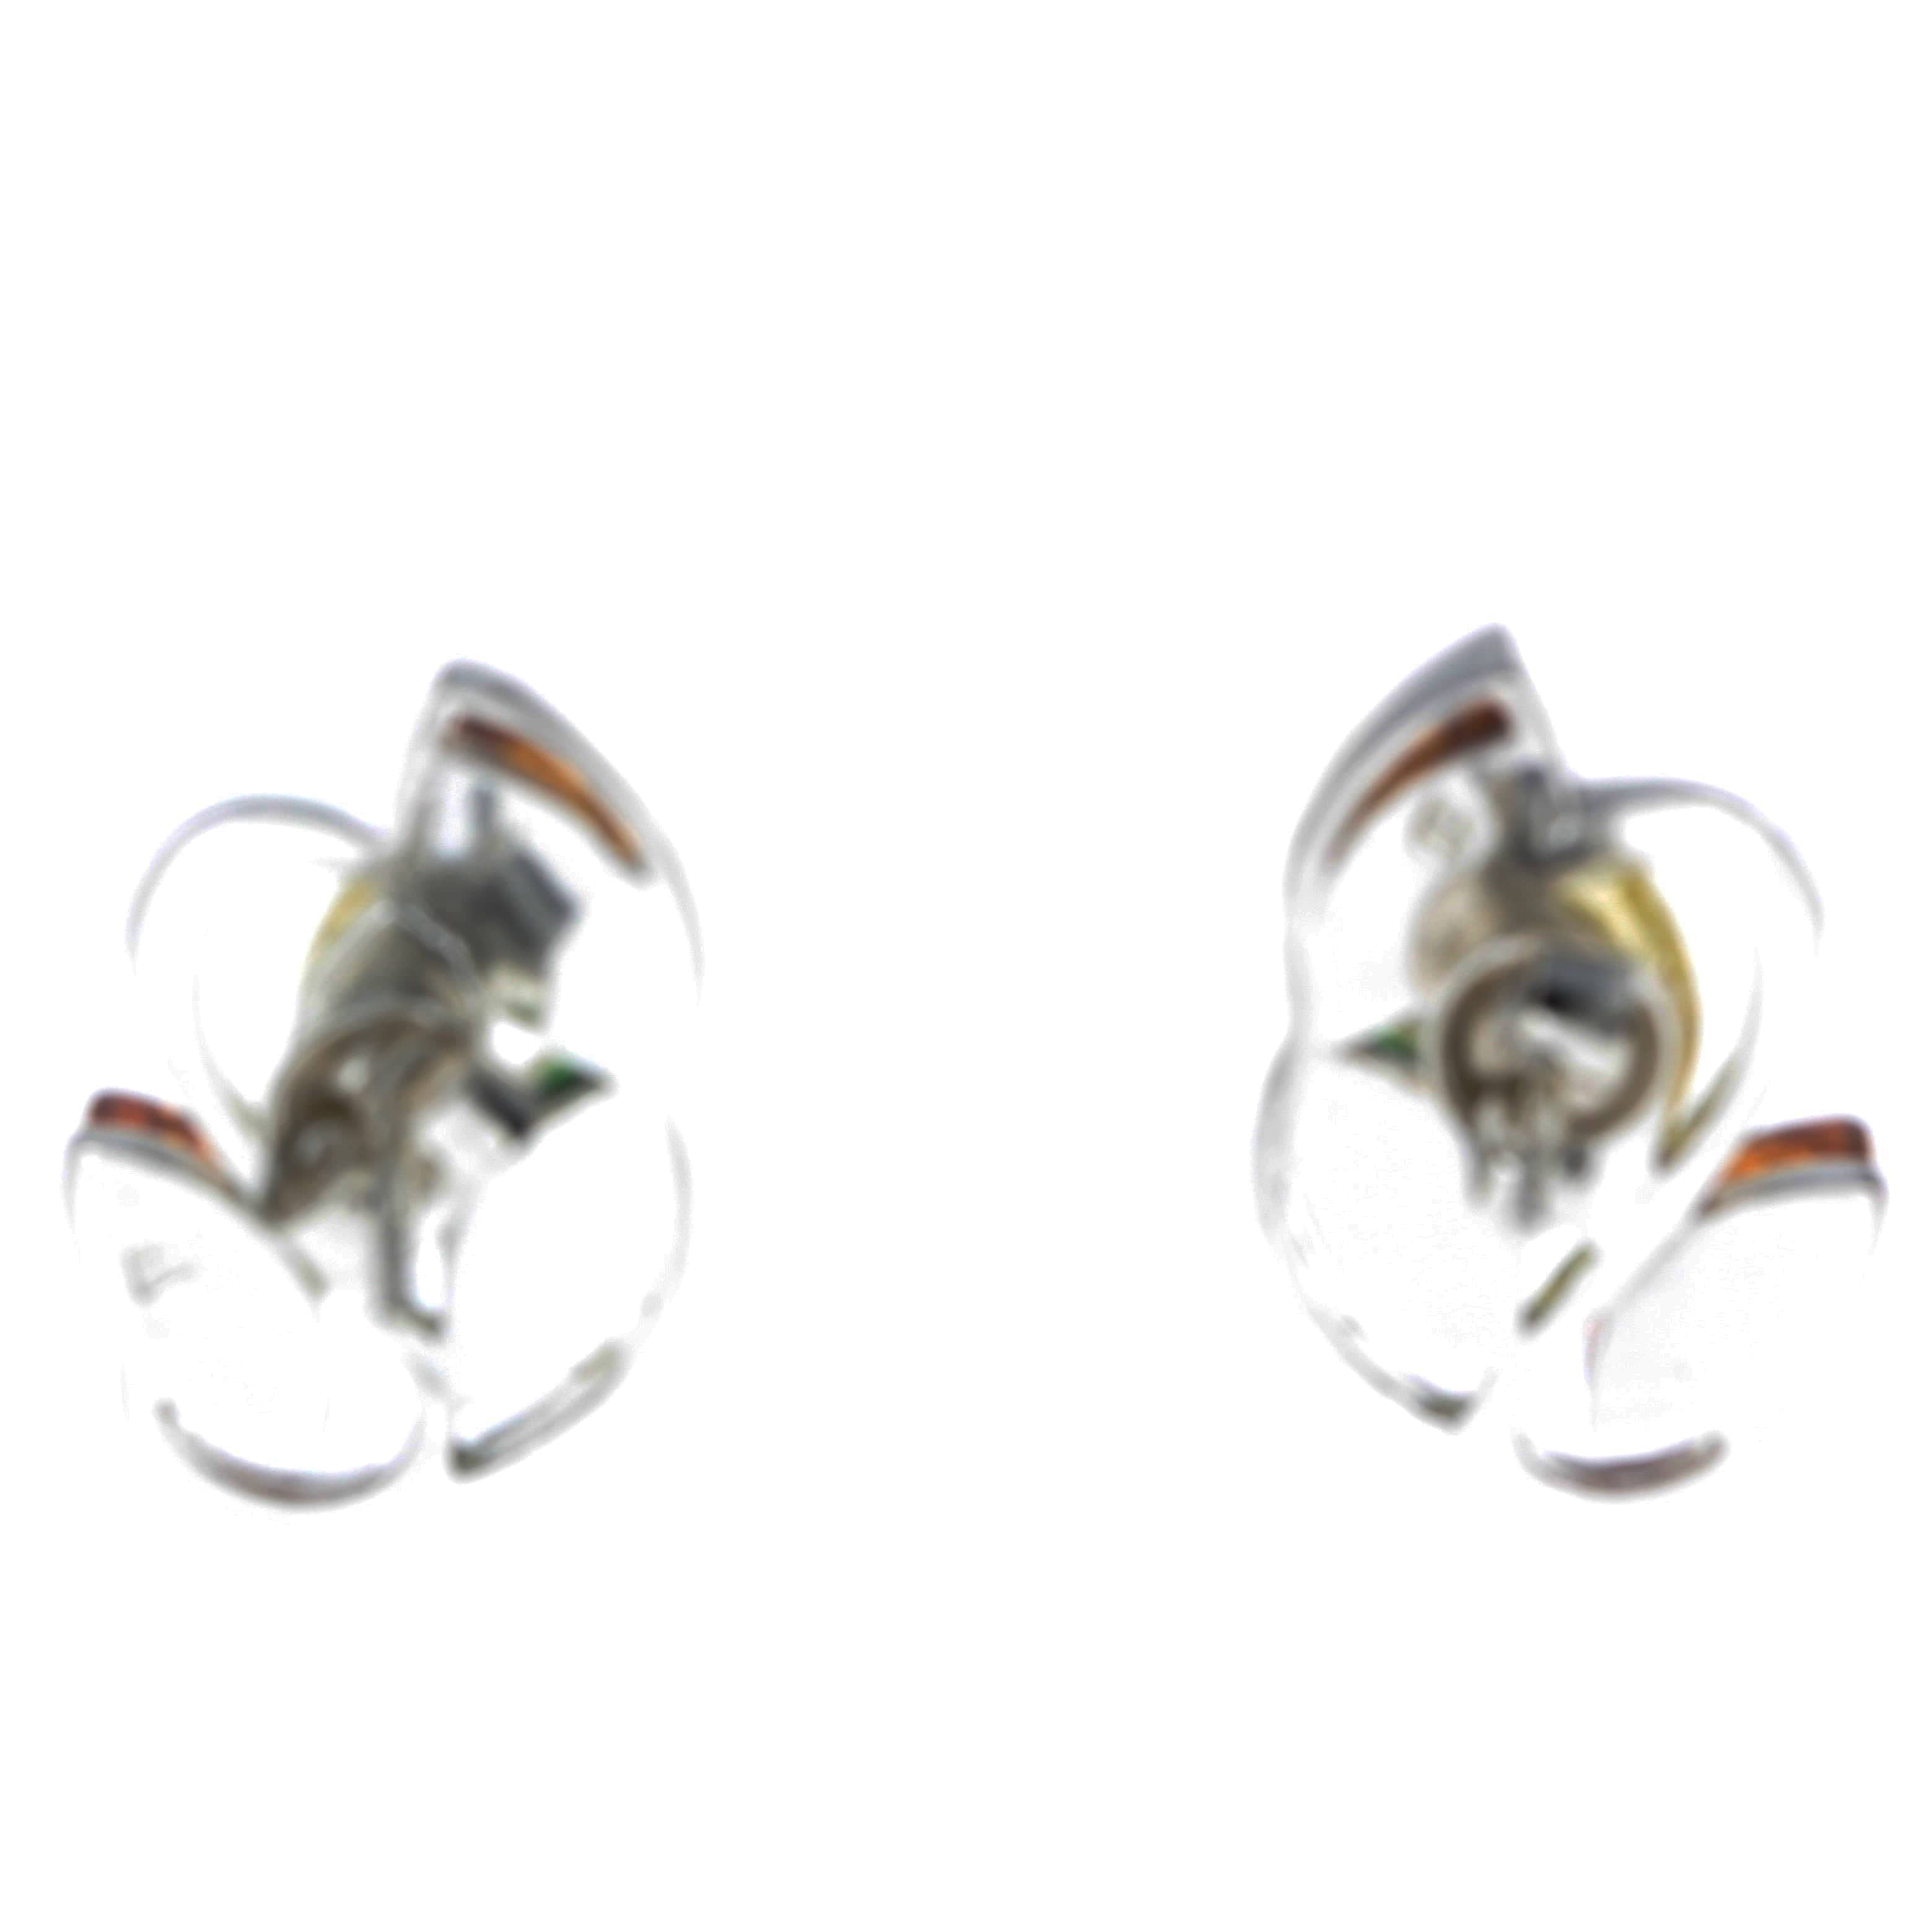 925 Sterling Silver & Genuine Baltic Amber Modern Studs Earrings - M186